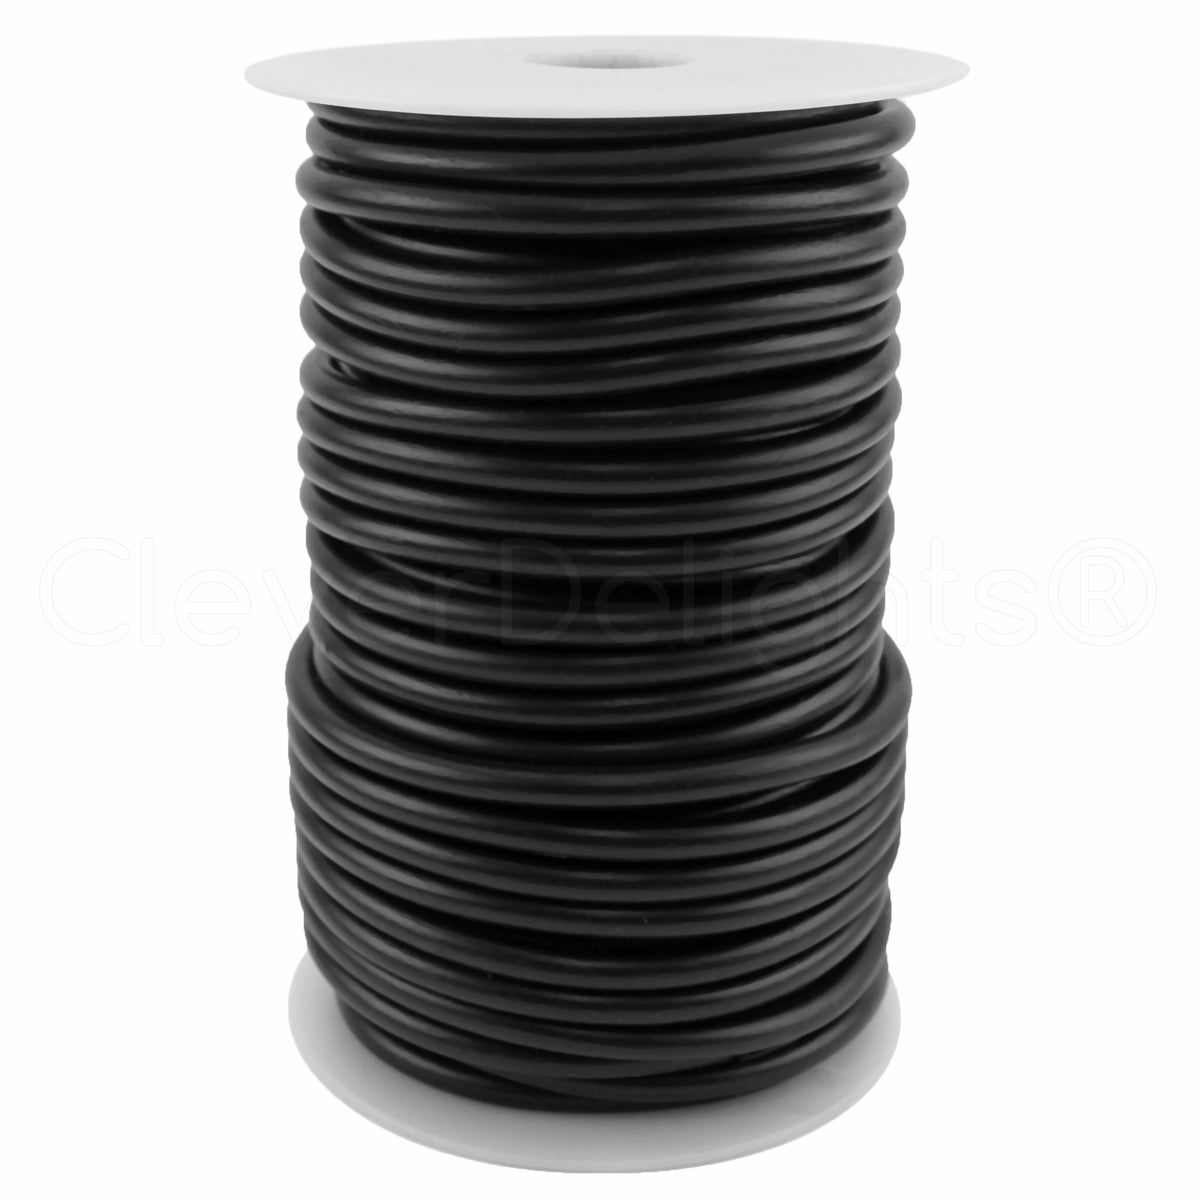 CleverDelights Plastic Spools - 3 x 2 3/4 - Black - 100 Pack 